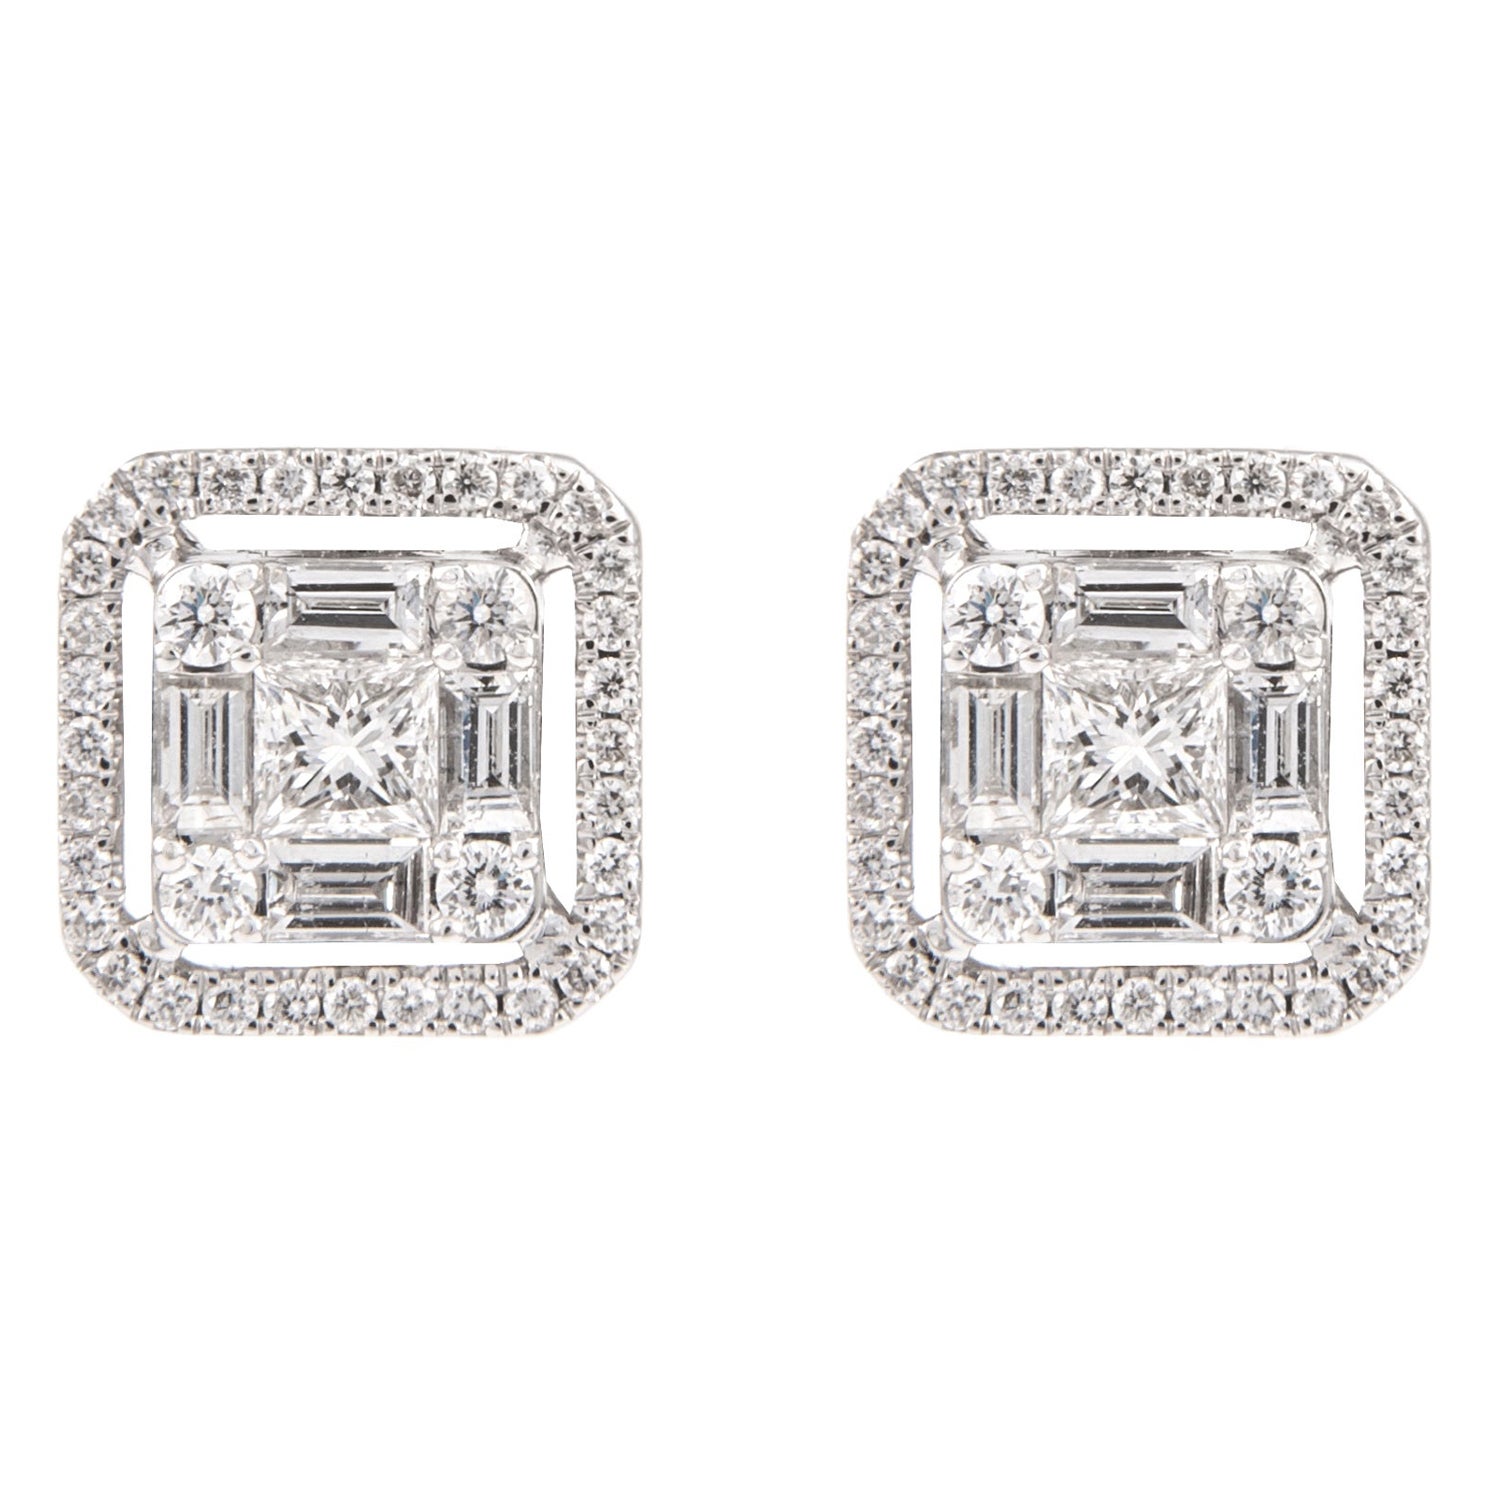 Alexander 1.29ct Illusion Set Diamond Stud Earrings with Halo 18k White Gold